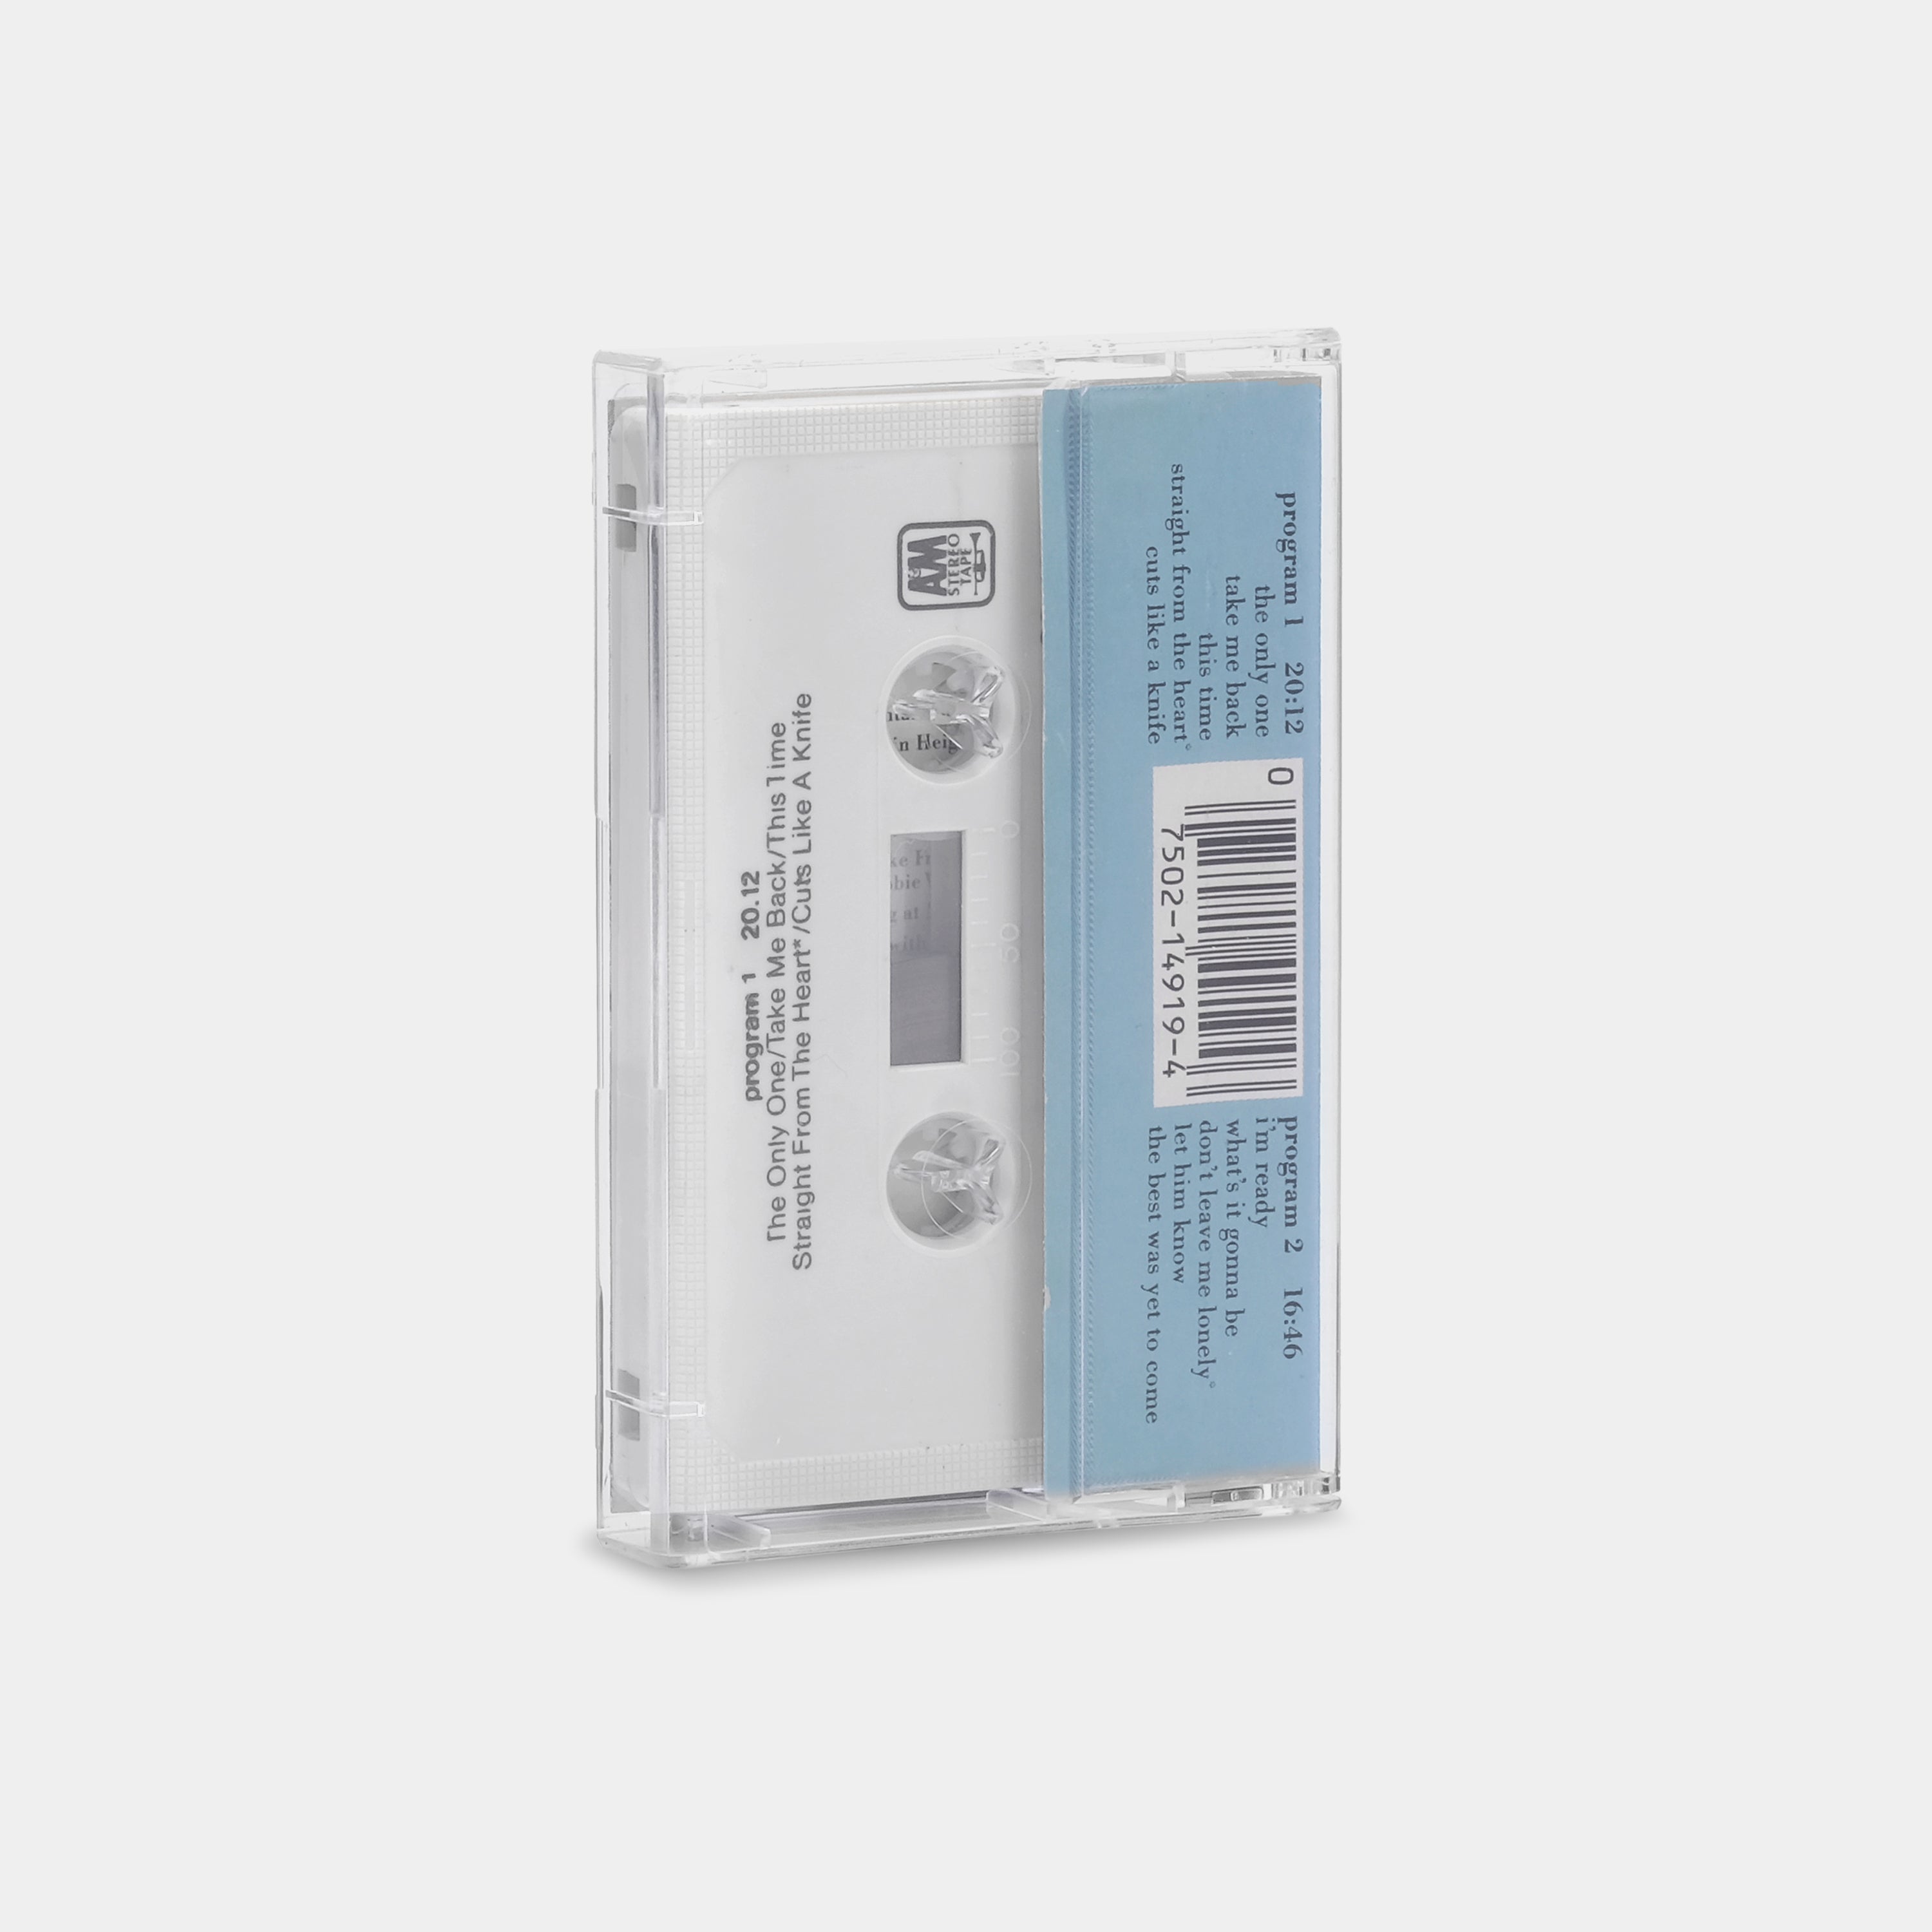 Bryan Adams - Cuts Like A Knife Cassette Tape